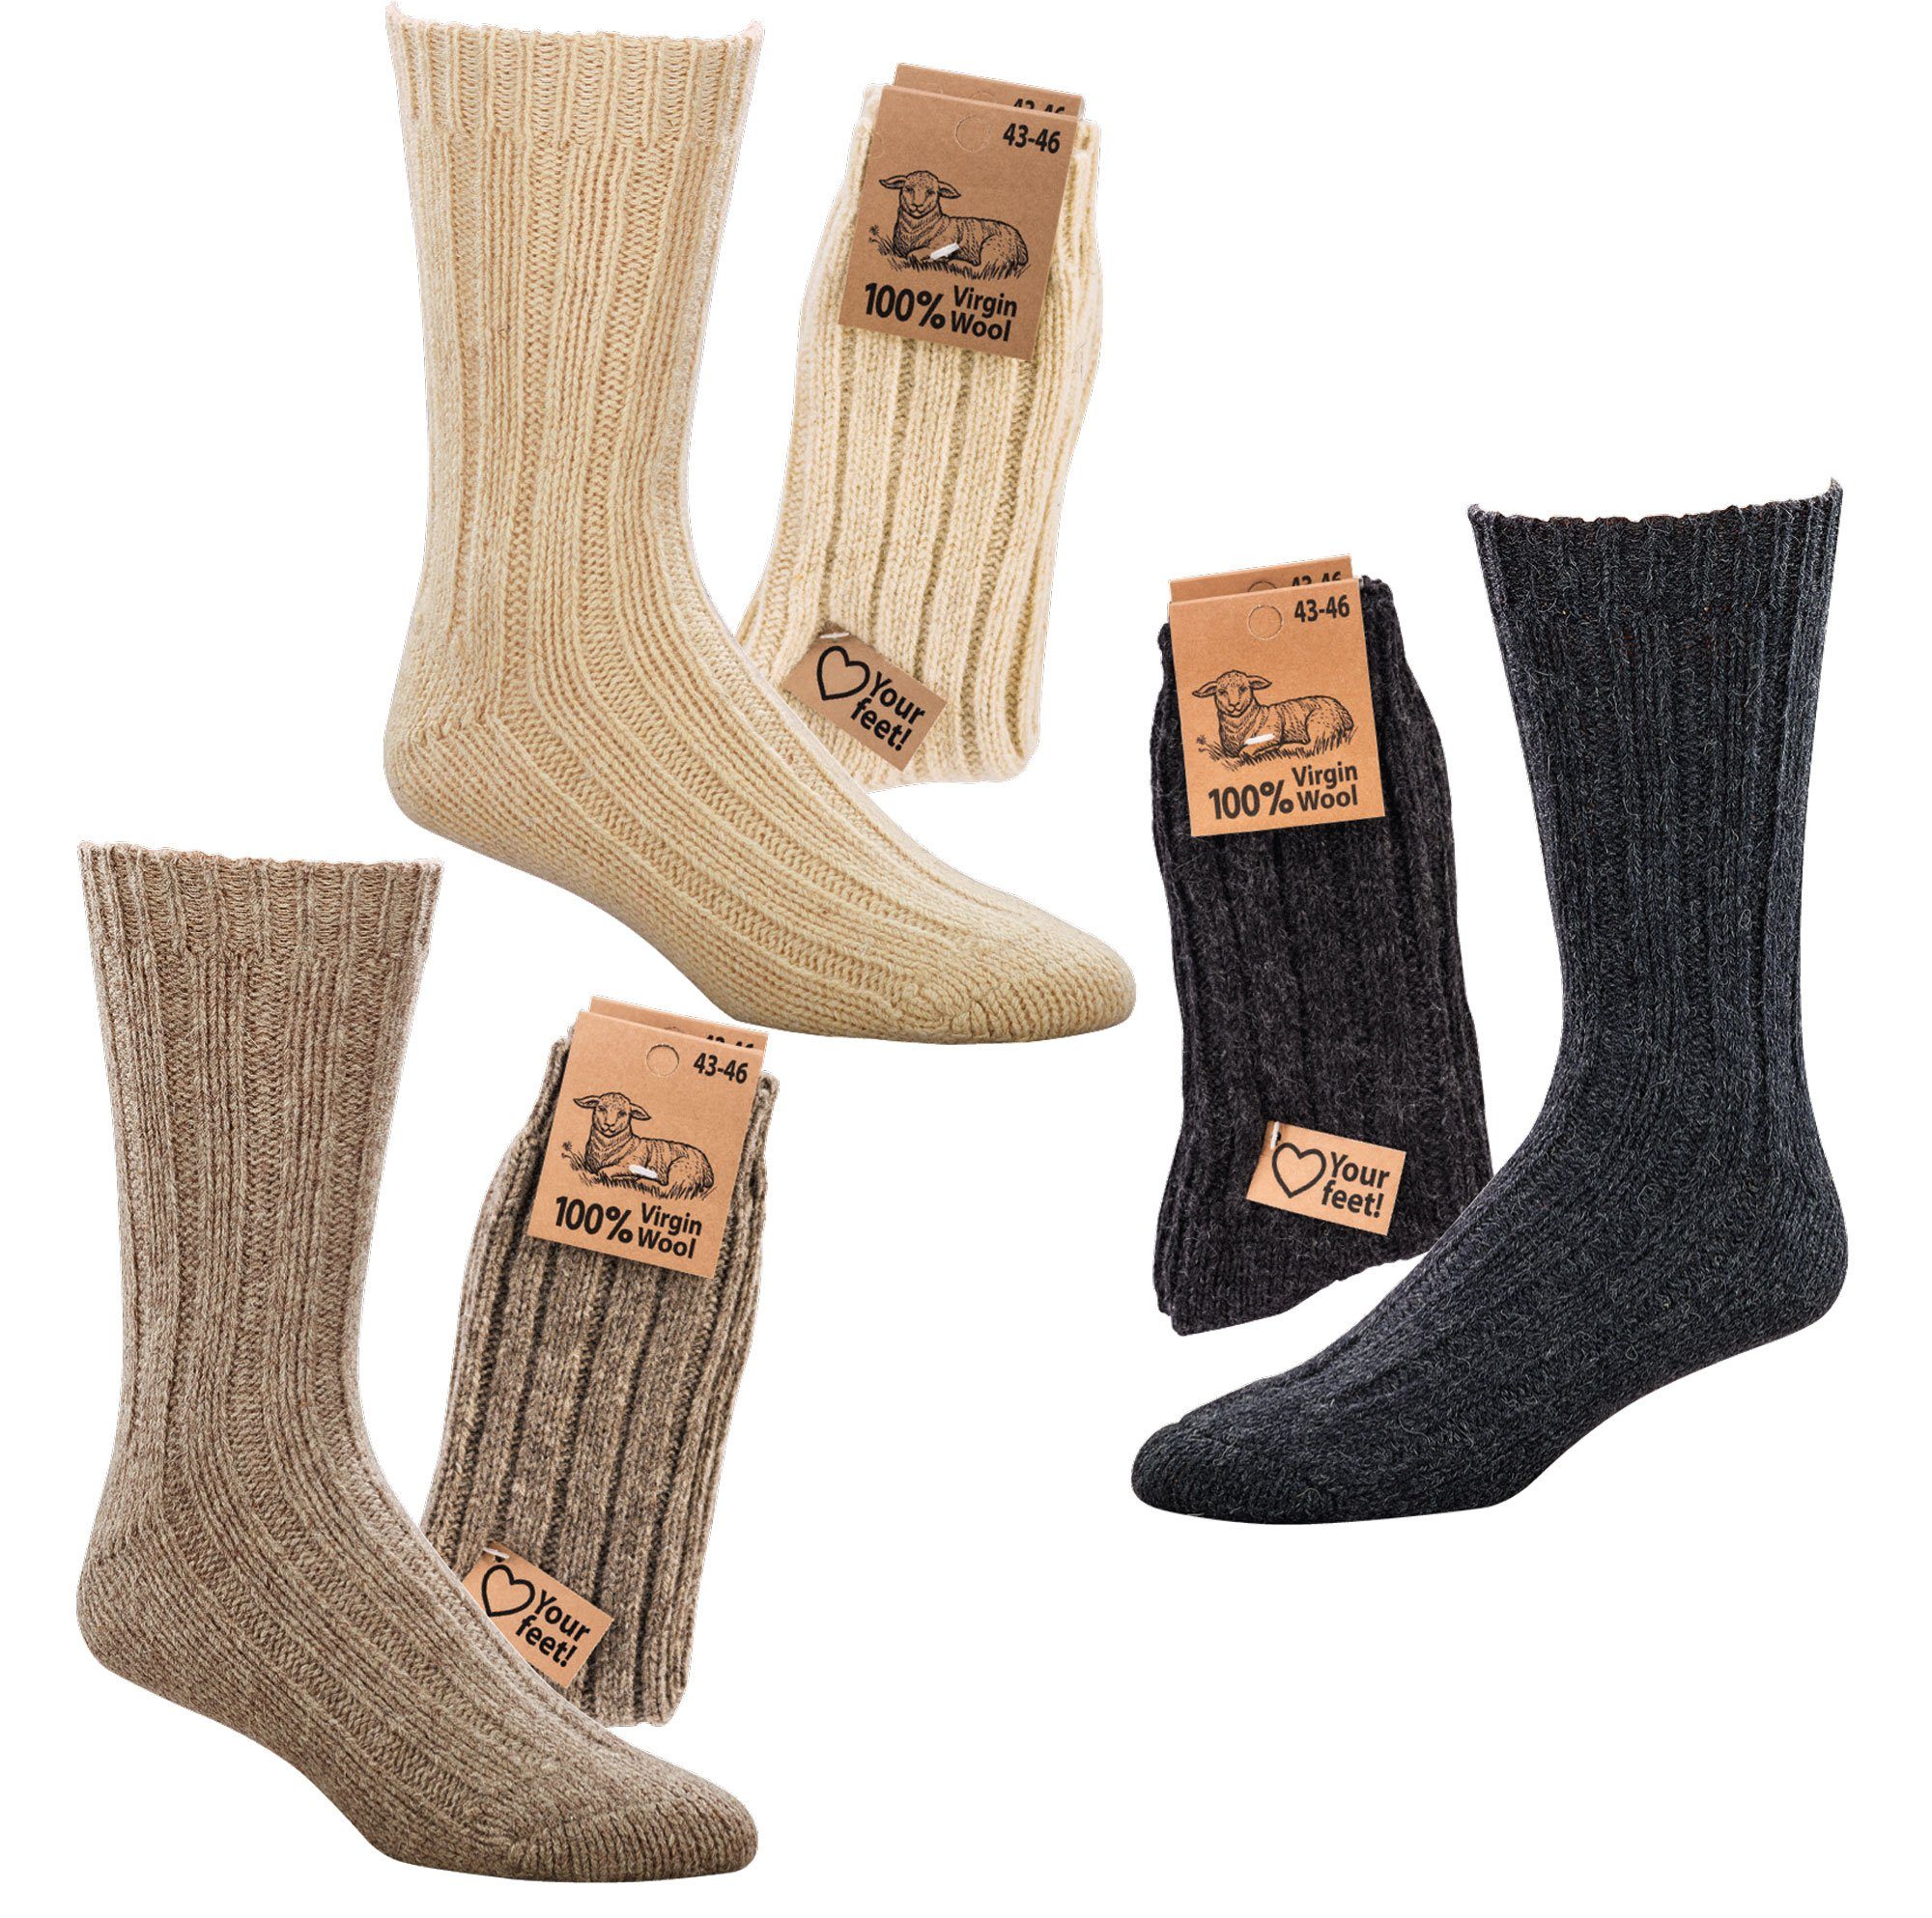 Socks 4 Fun Wowerat Socken Warme Wollsocken 100% "Virgin Wool" Grobstrick Schafwolle (2 Paar) natur